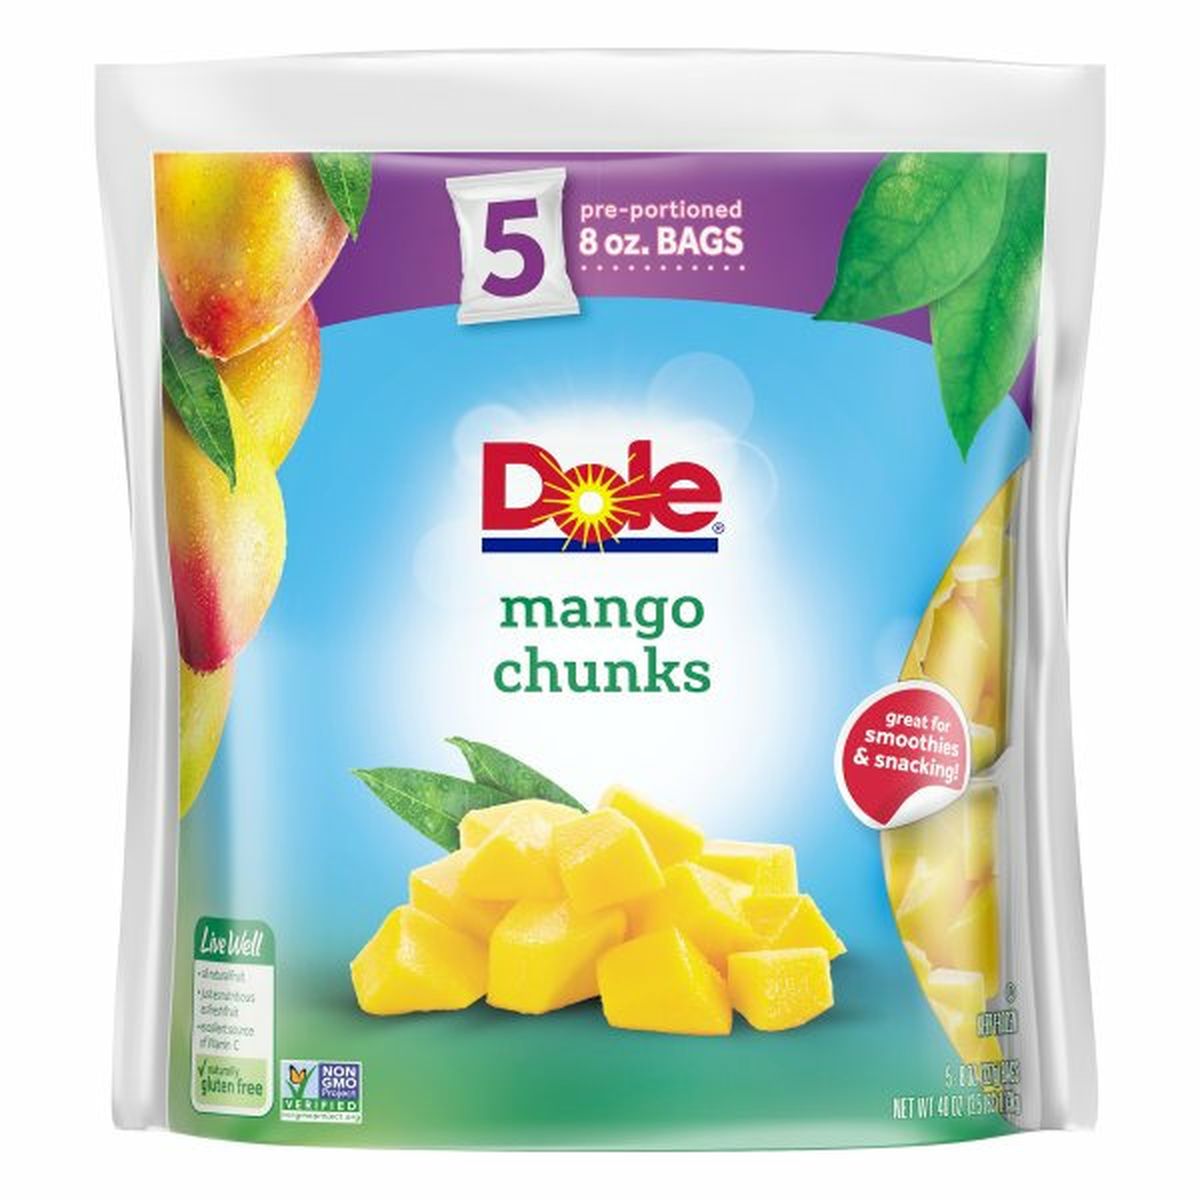 Calories in Dole Mango Chunks